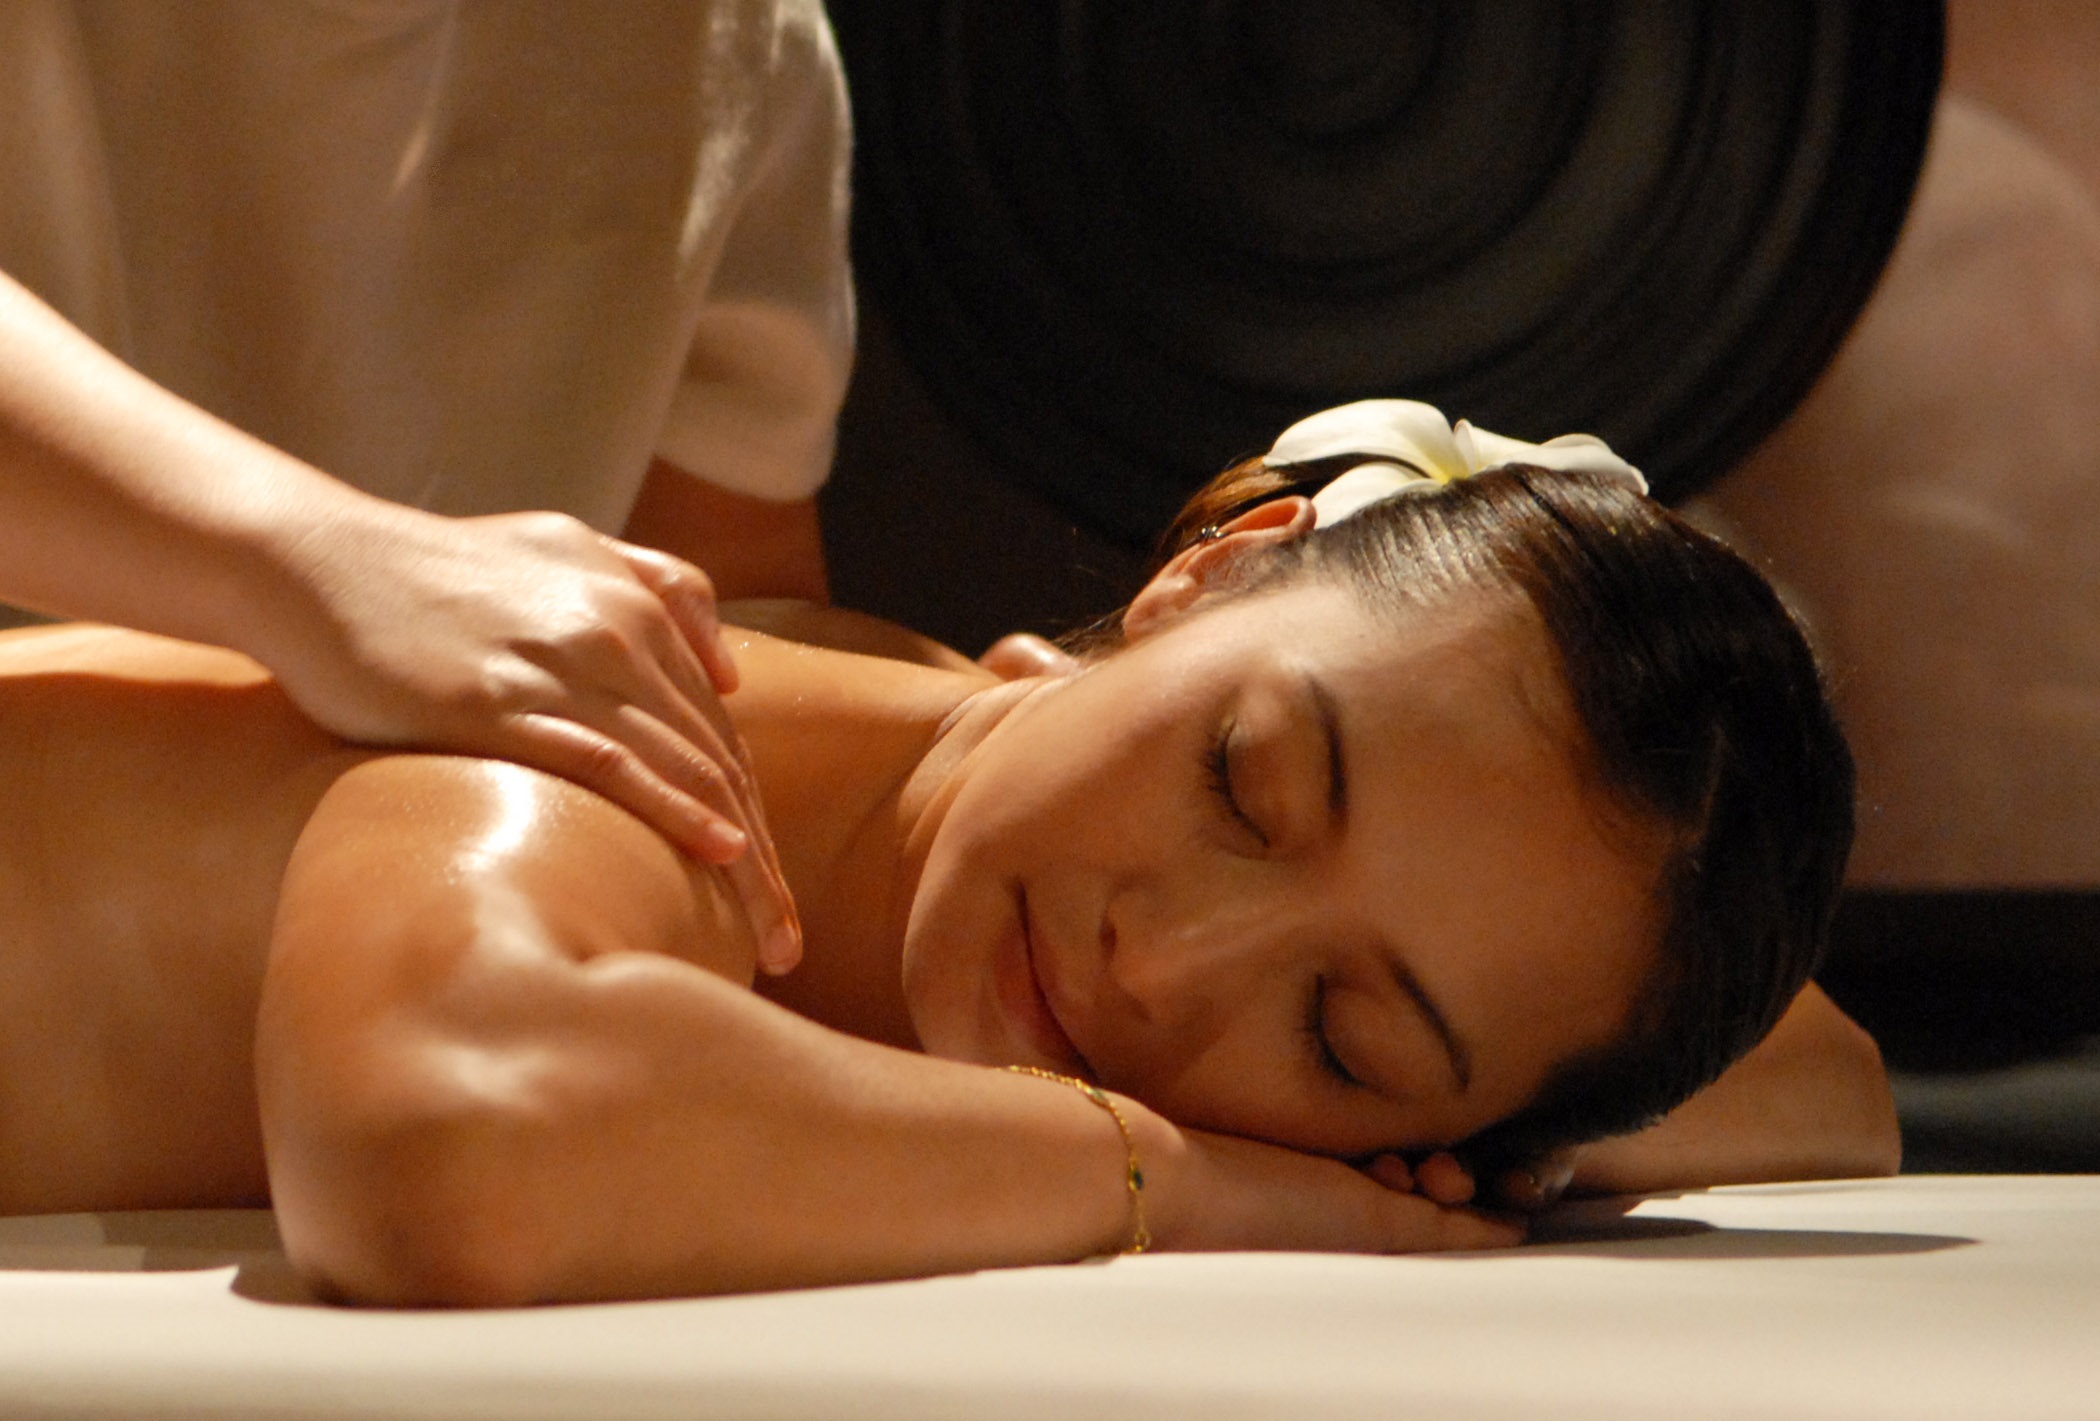 desiree davison share young asian massage videos photos